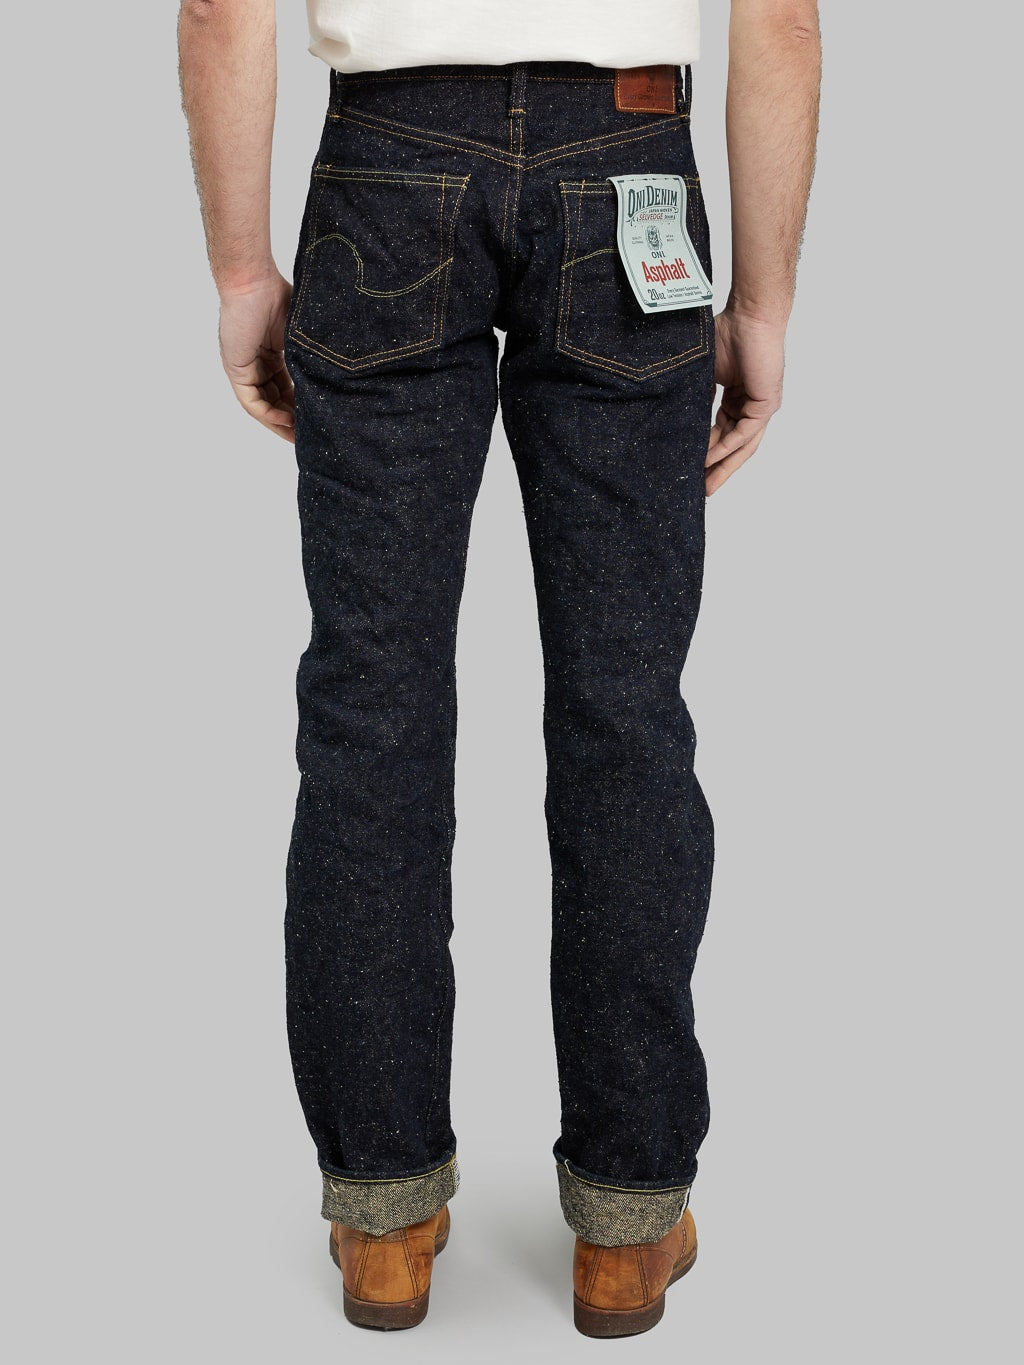 ONI Denim 288 Asphalt 20oz Regular Straight Jeans back fit